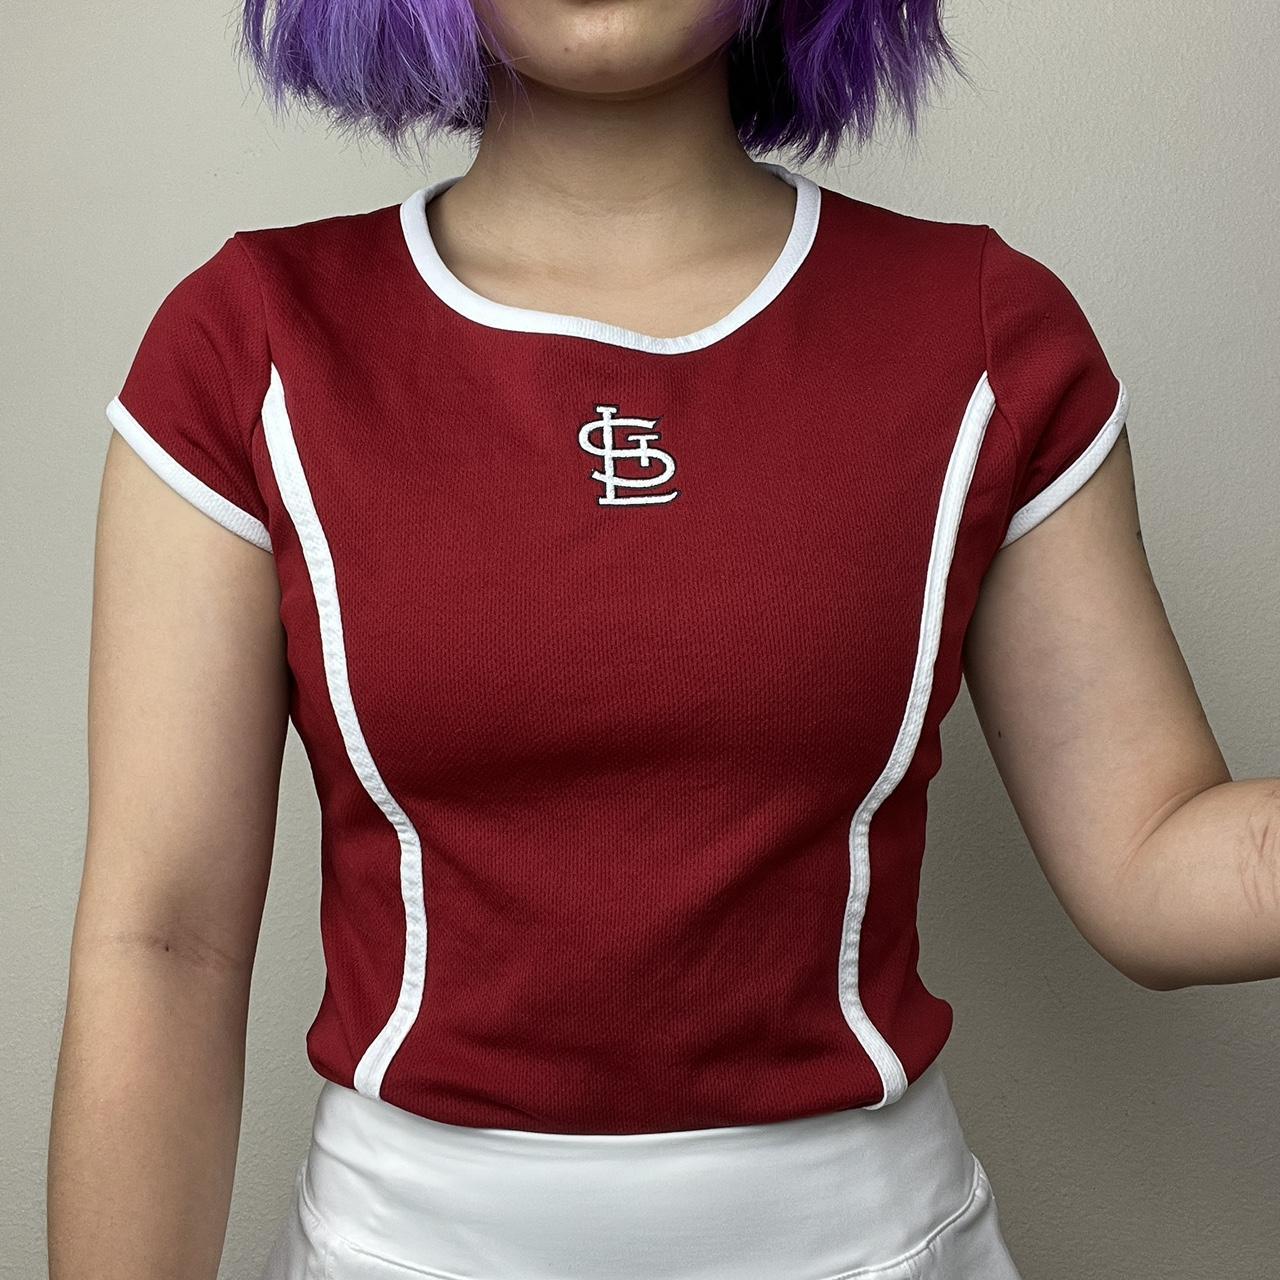 STL Cardinals jersey Size medium In excellent - Depop